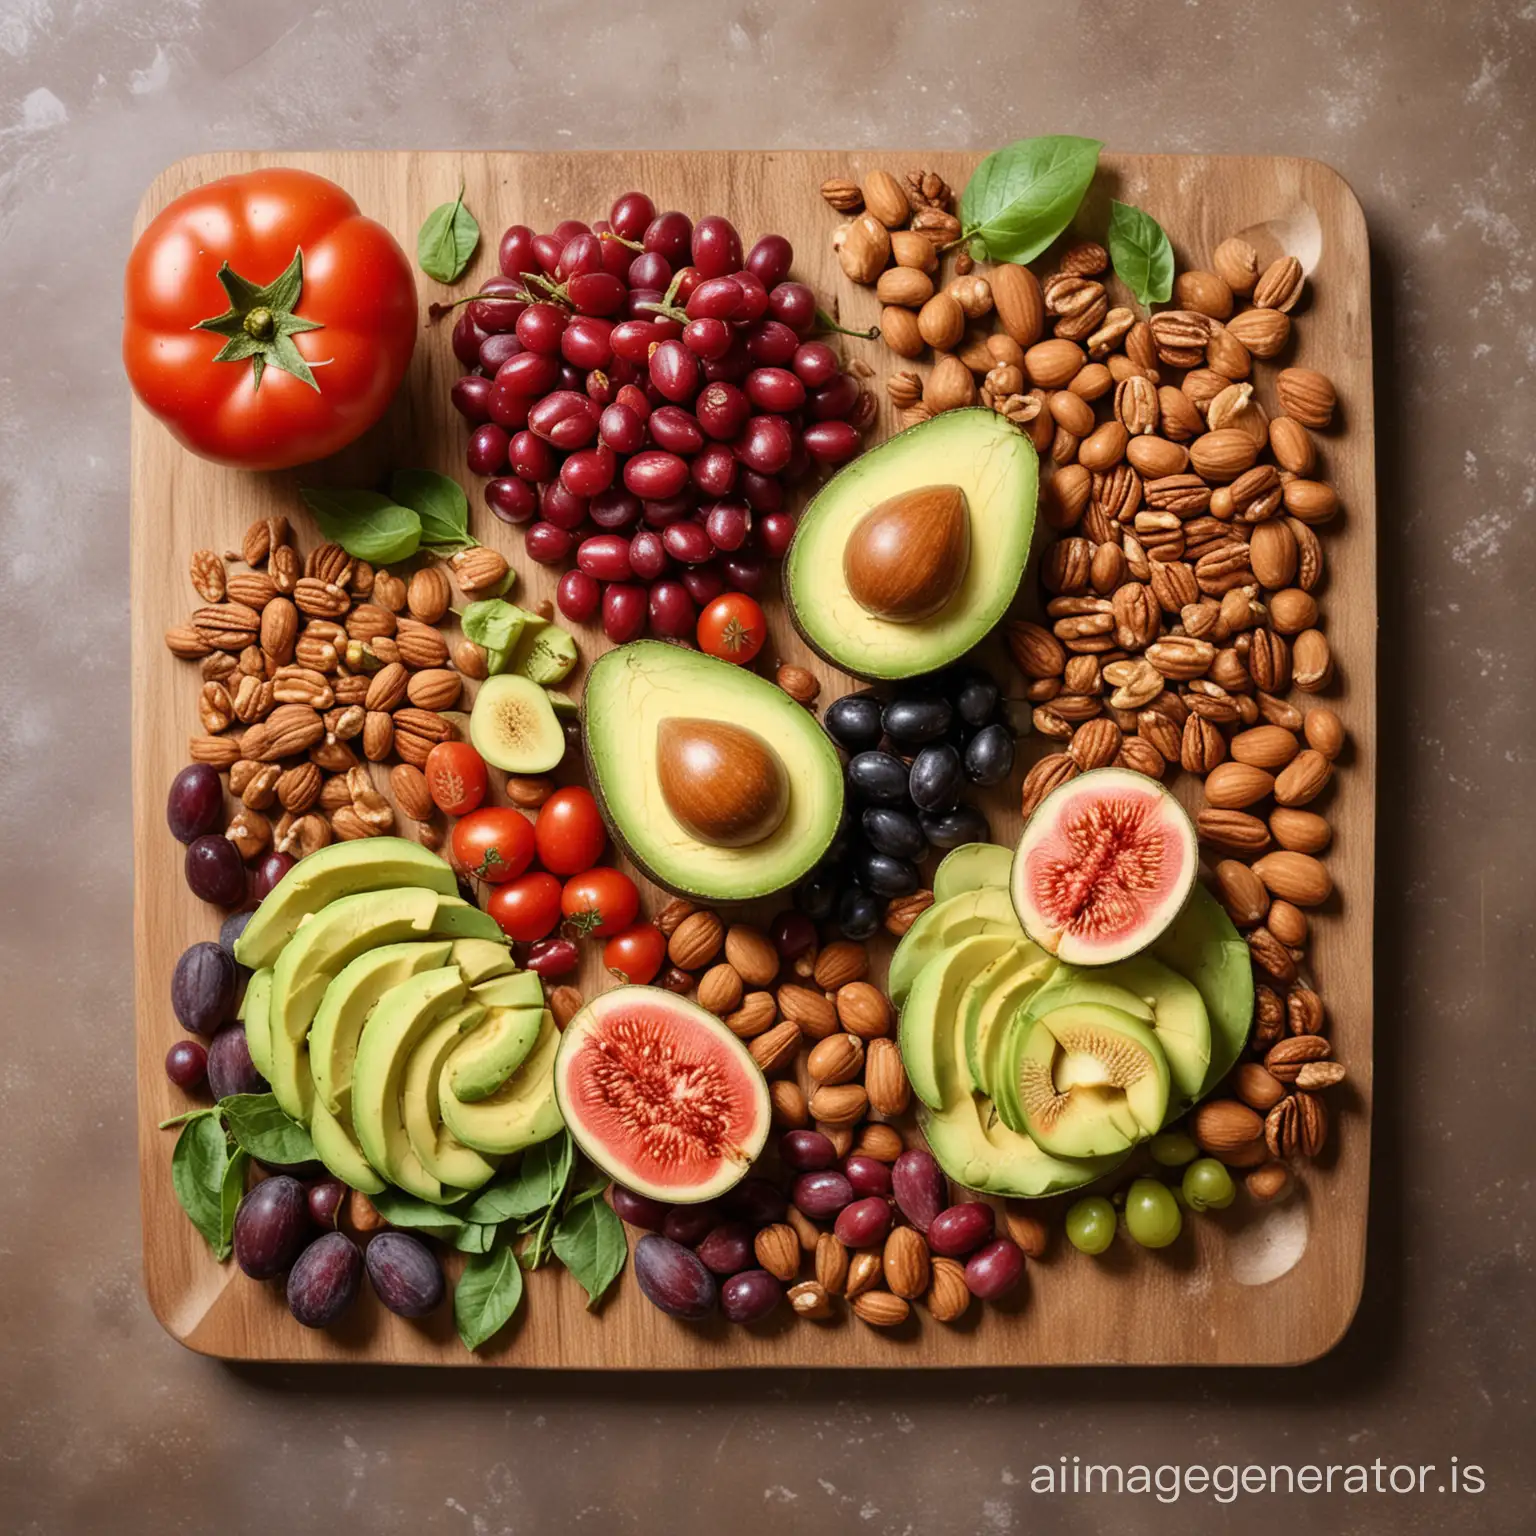 Fresh-Salad-Ingredients-Avocado-Tomato-Kidney-Bean-Figs-Walnut-Ginger-Grapes